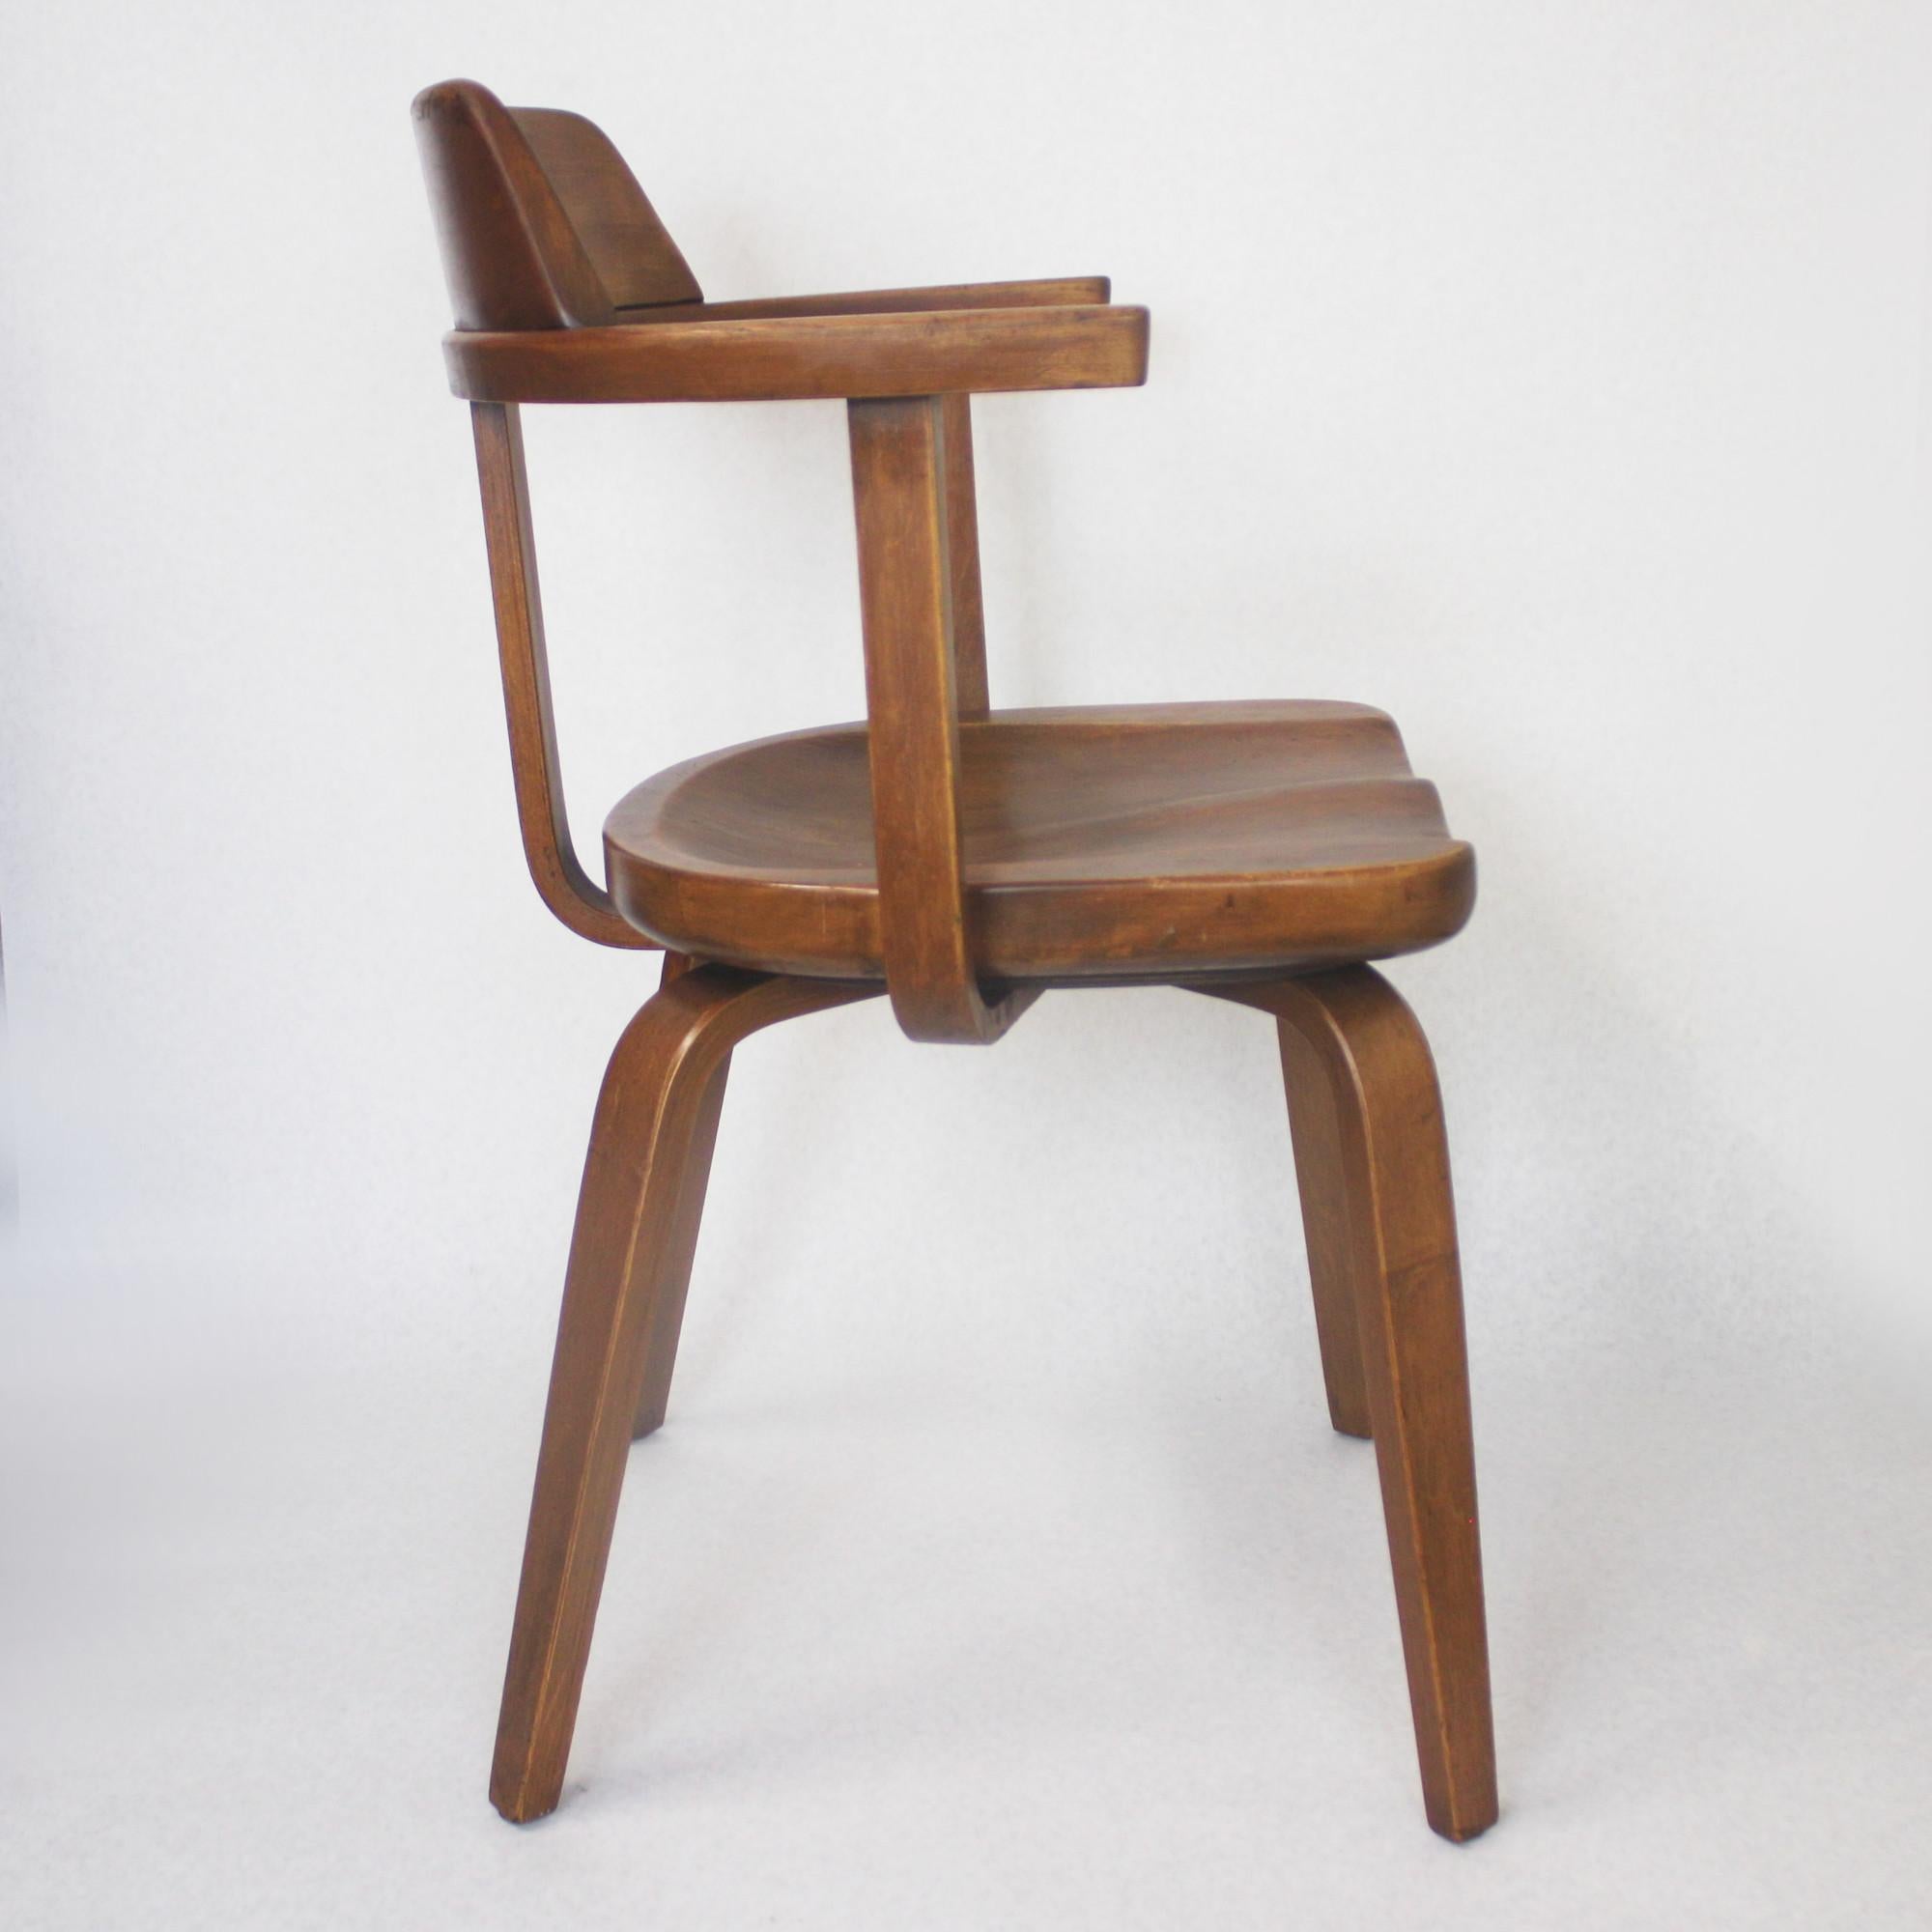 American Rare Mid-Century Modern W199 Chair Designed by Walter Gropius for Thonet Bauhaus